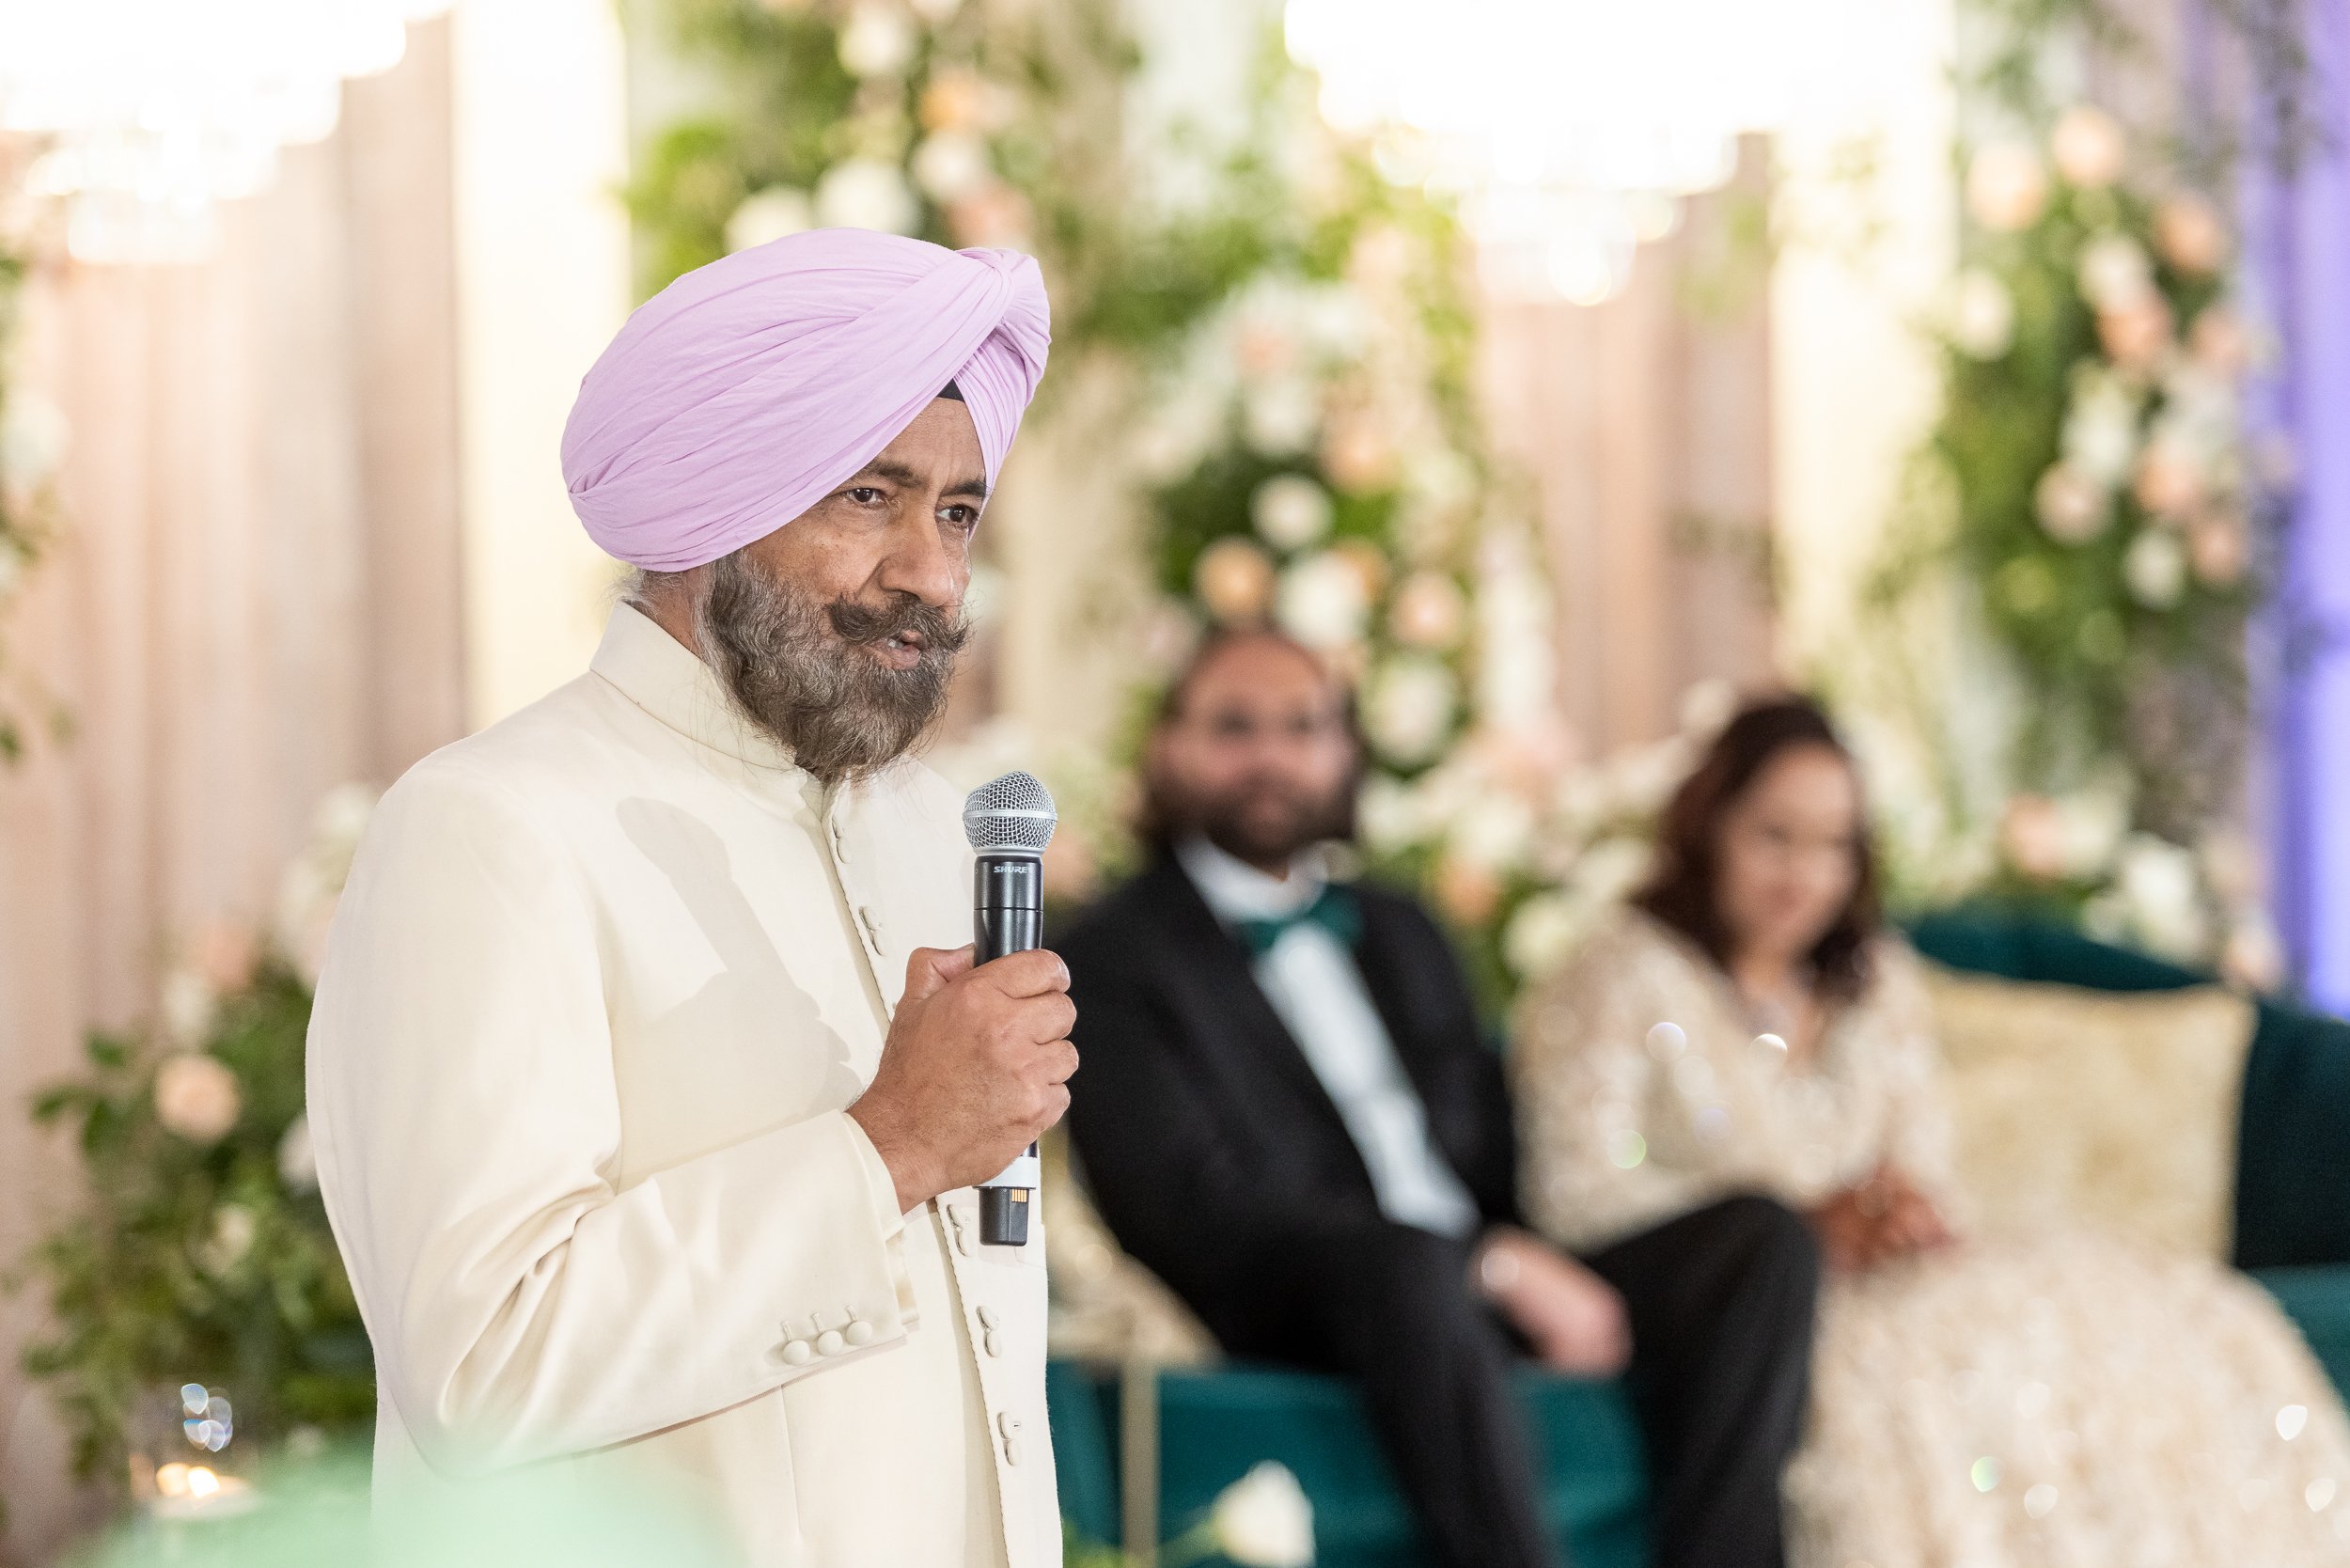 Hyatt Regency Irvine Indian Wedding Photos-17.jpg